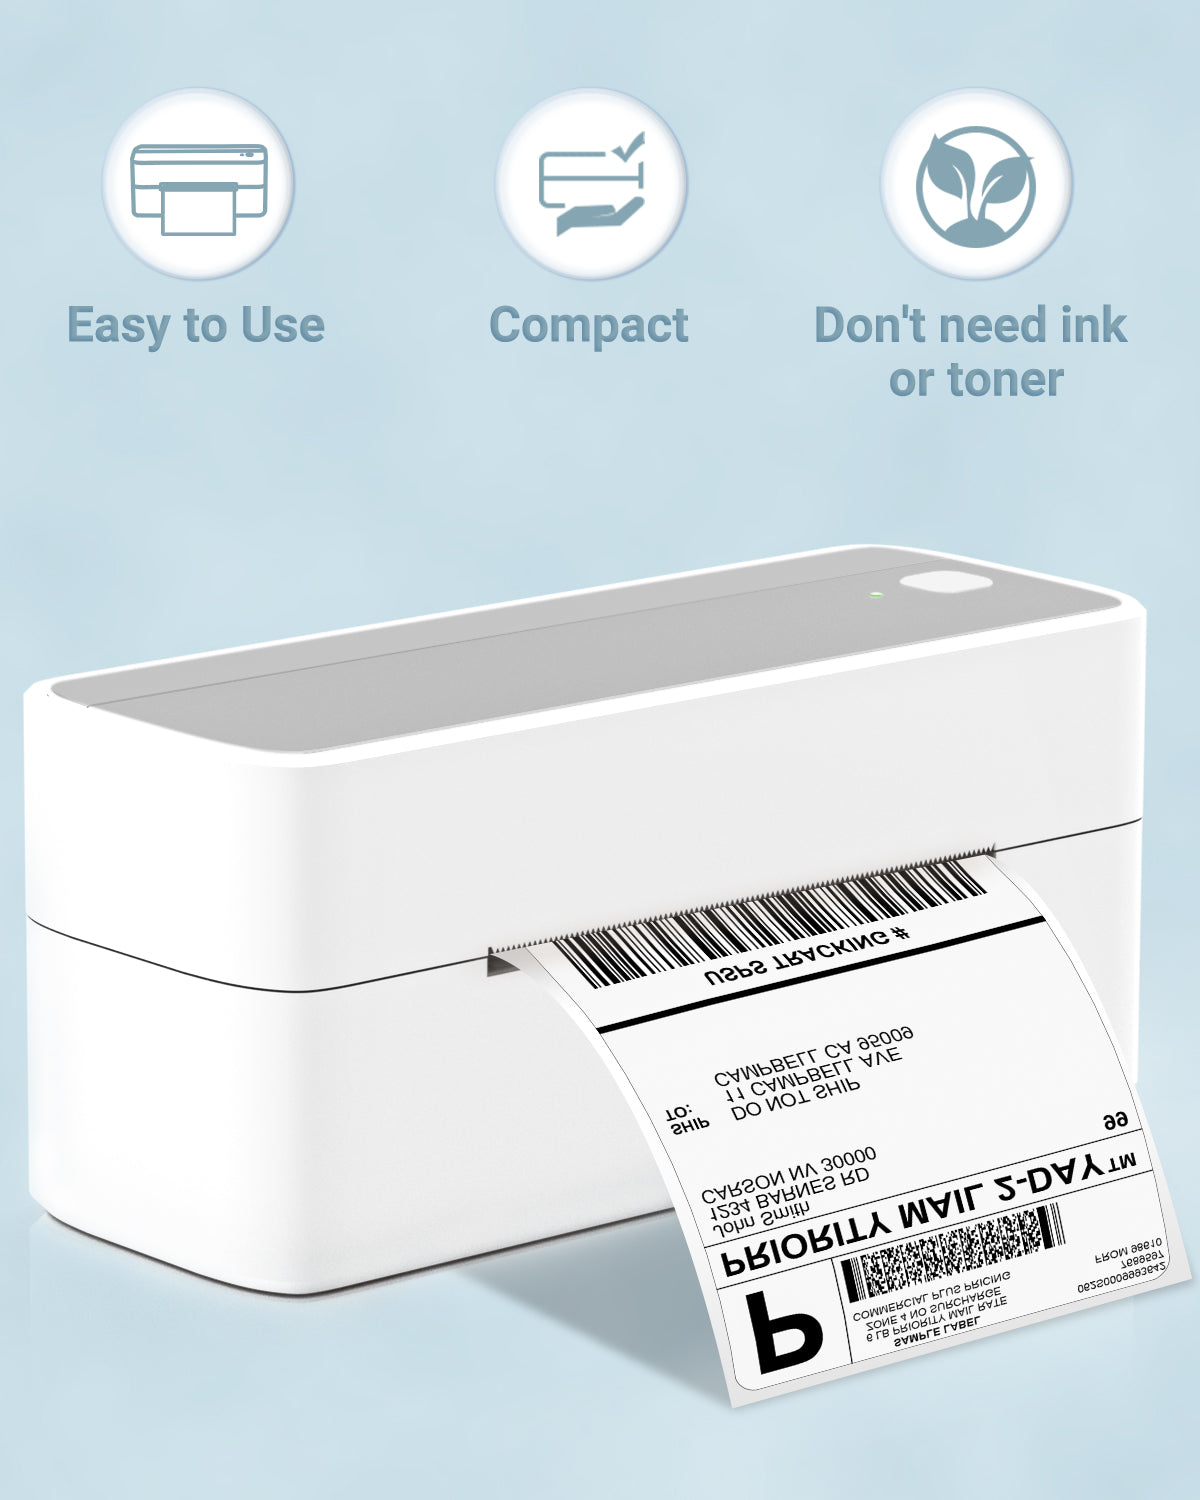 Omezizy Wireless Label Printer, Bluetooth Shipping Label Printer, Thermal Label Printer 4x6 - Compatible with eBay, Esty, Shopify, Amazon, Royal Mail, Hermes, Parcel2Go, UPS